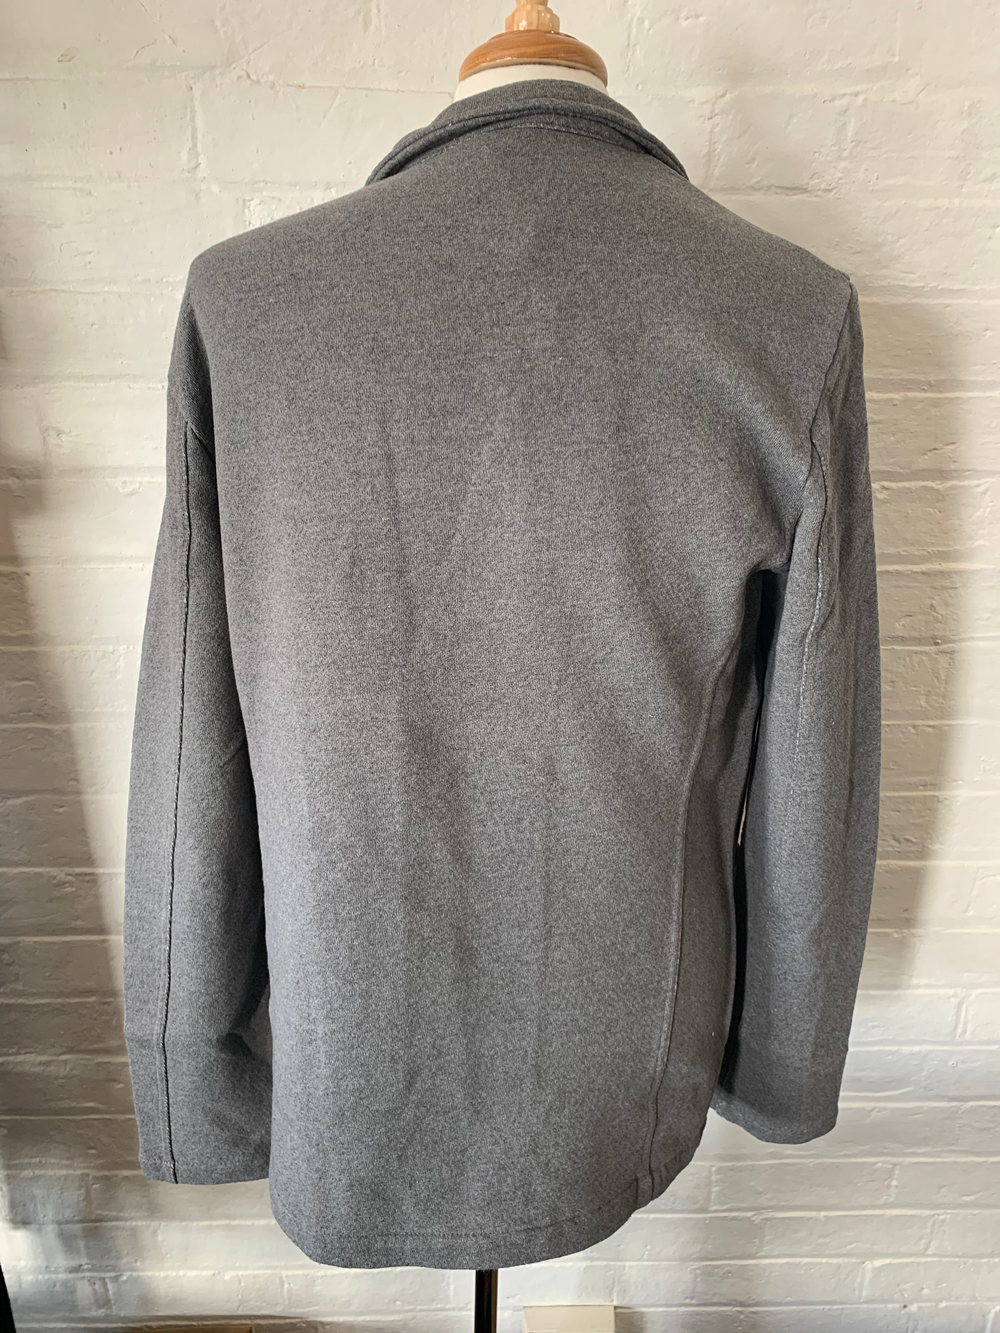 Crossley - TELLAN Sweatshirt Jacket with Pockets in Grey | Buster McGee